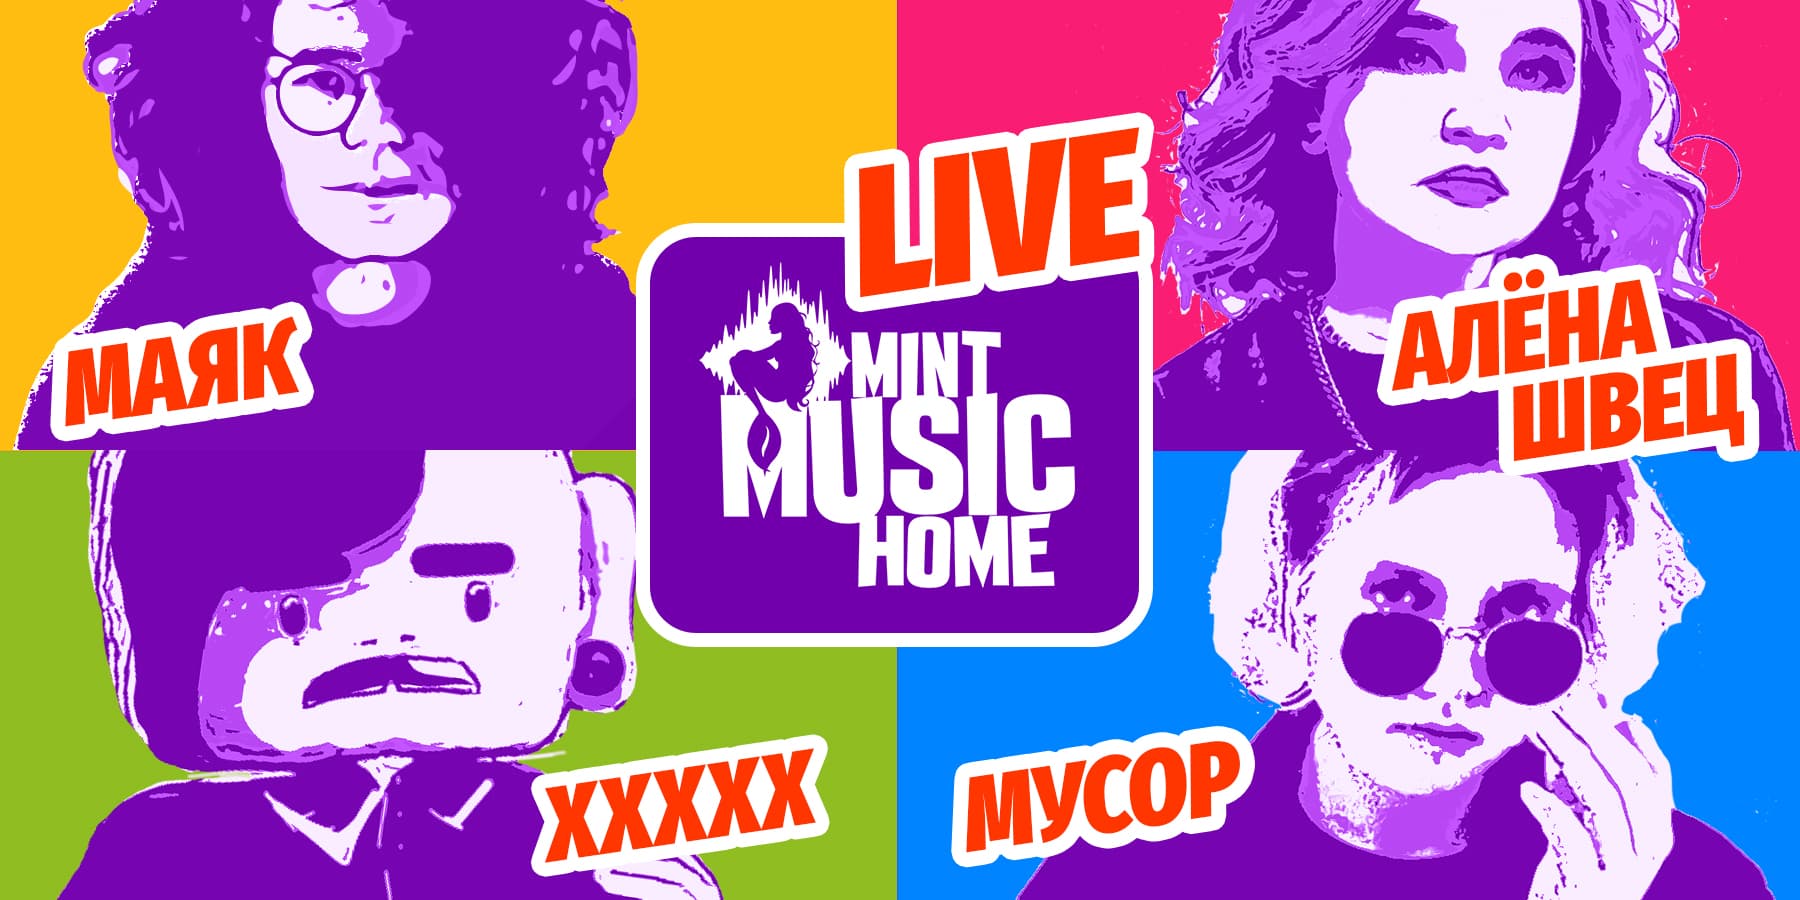 Mint Music Home Live